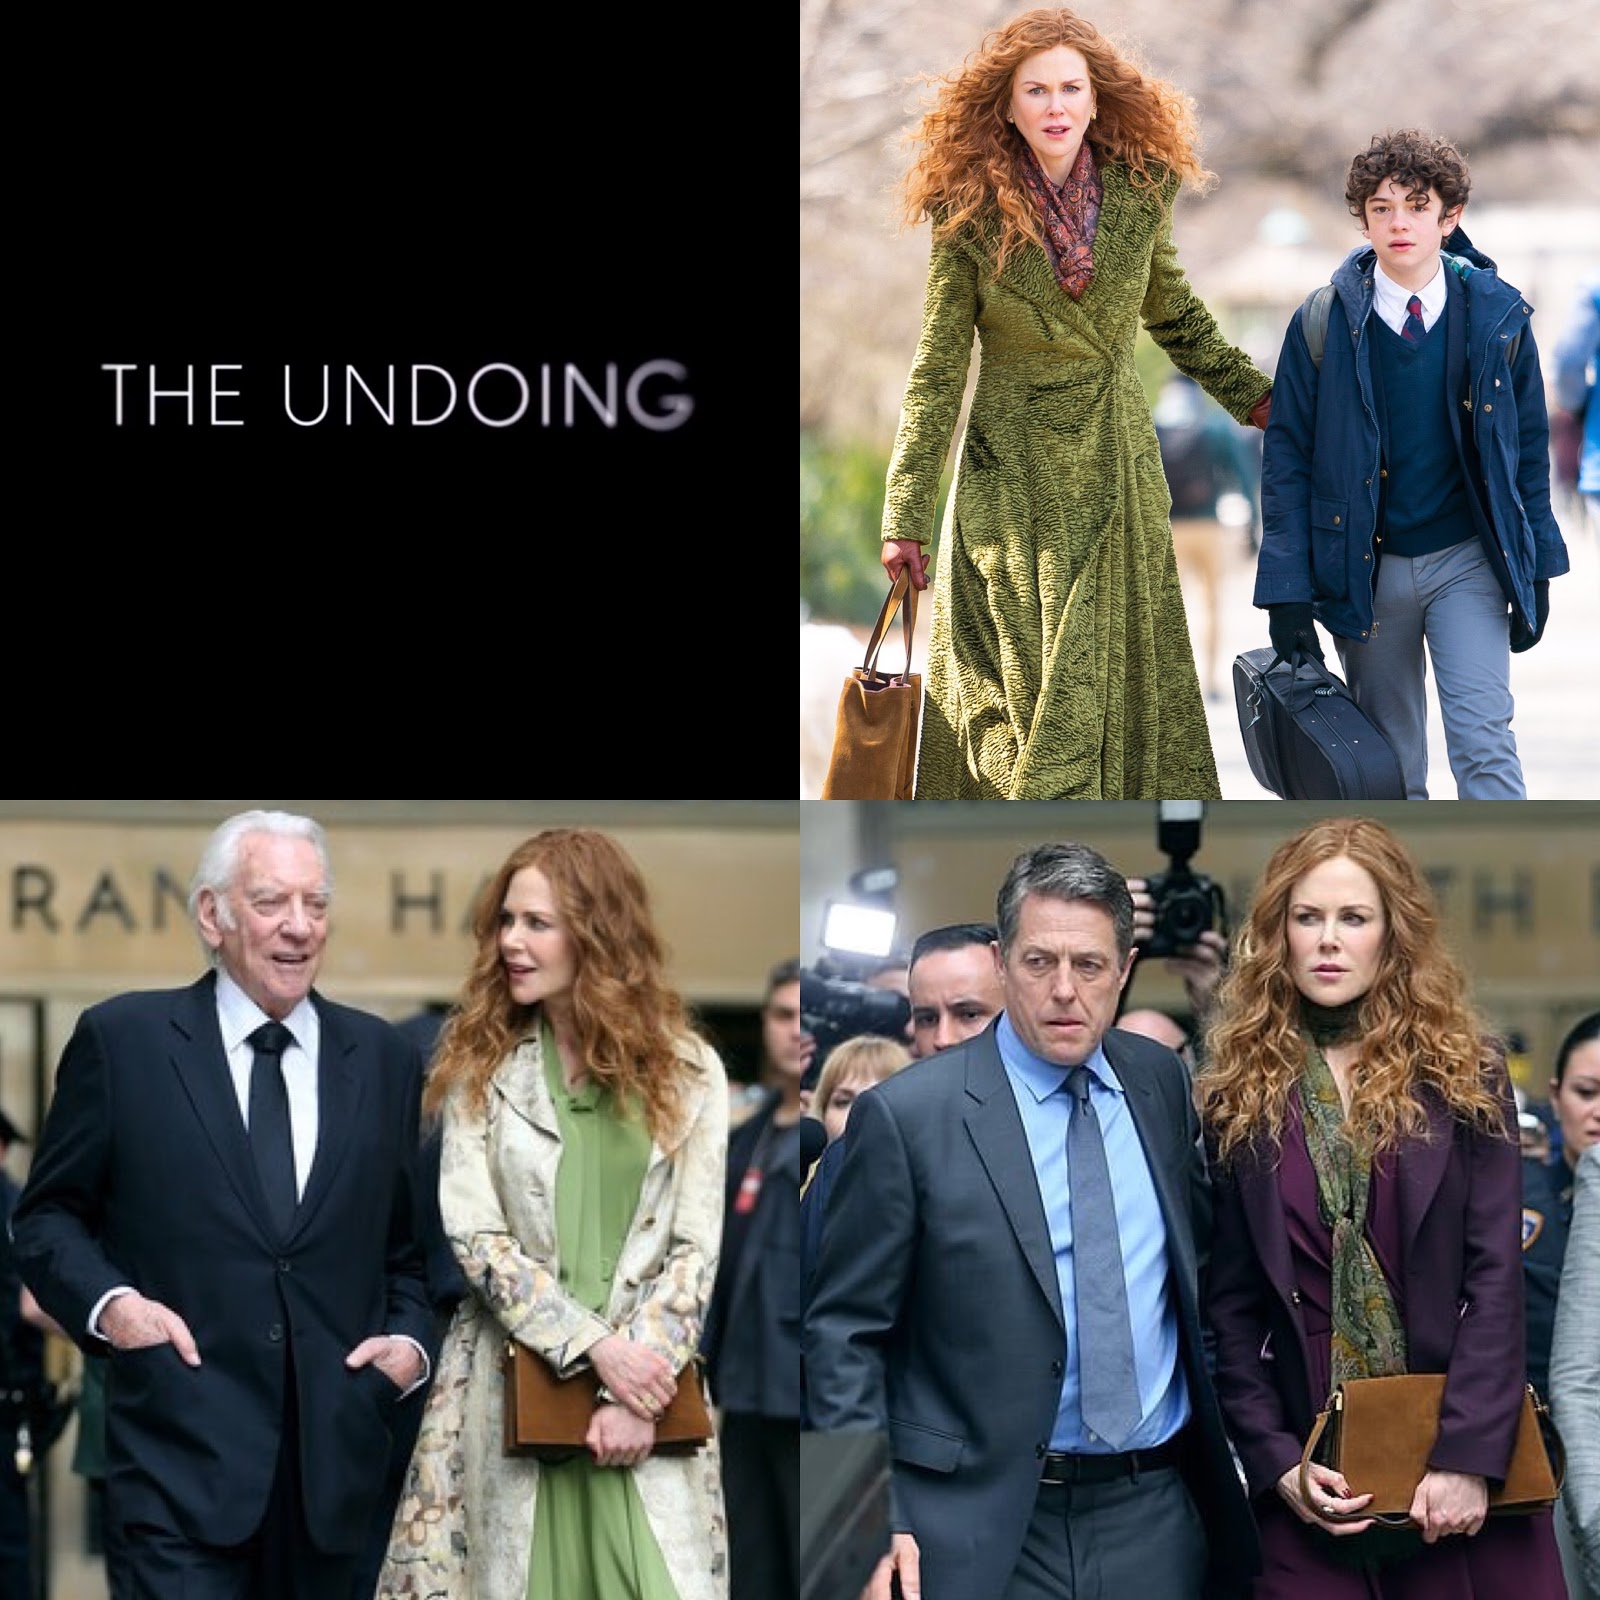 THE UNDOING Official Trailer (2020) Hugh Grant, Nicole Kidman, HBO Series 